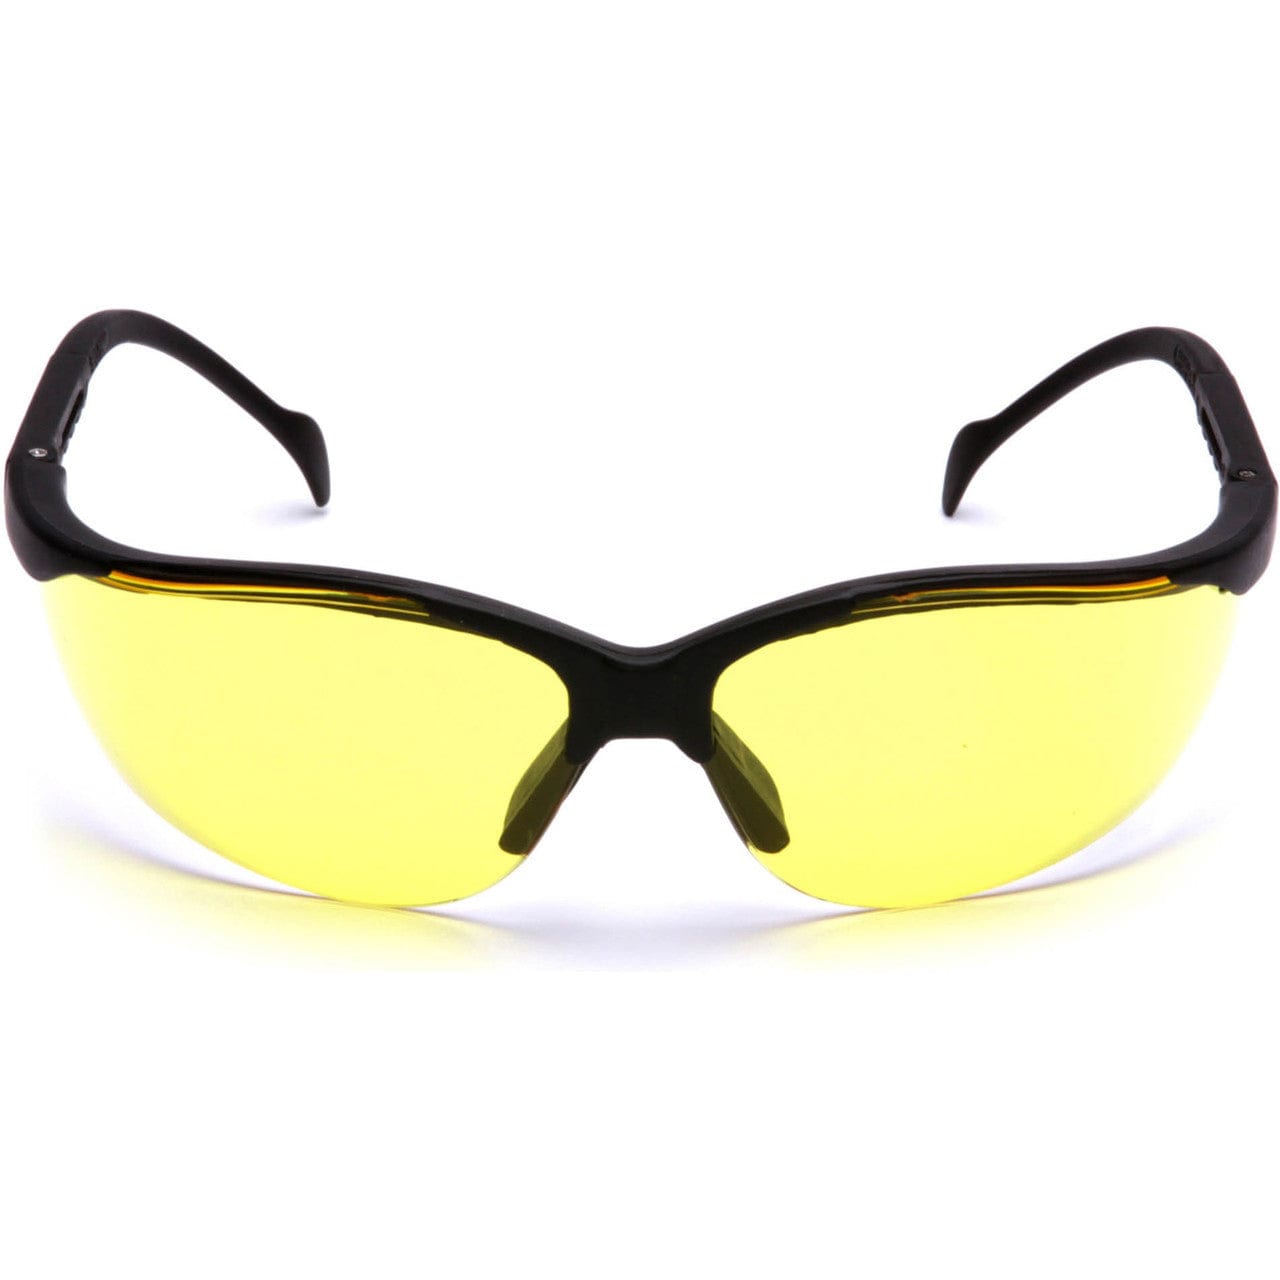 Pyramex Venture 2 Safety Glasses Black Frame Amber Lens SB1830S Front View